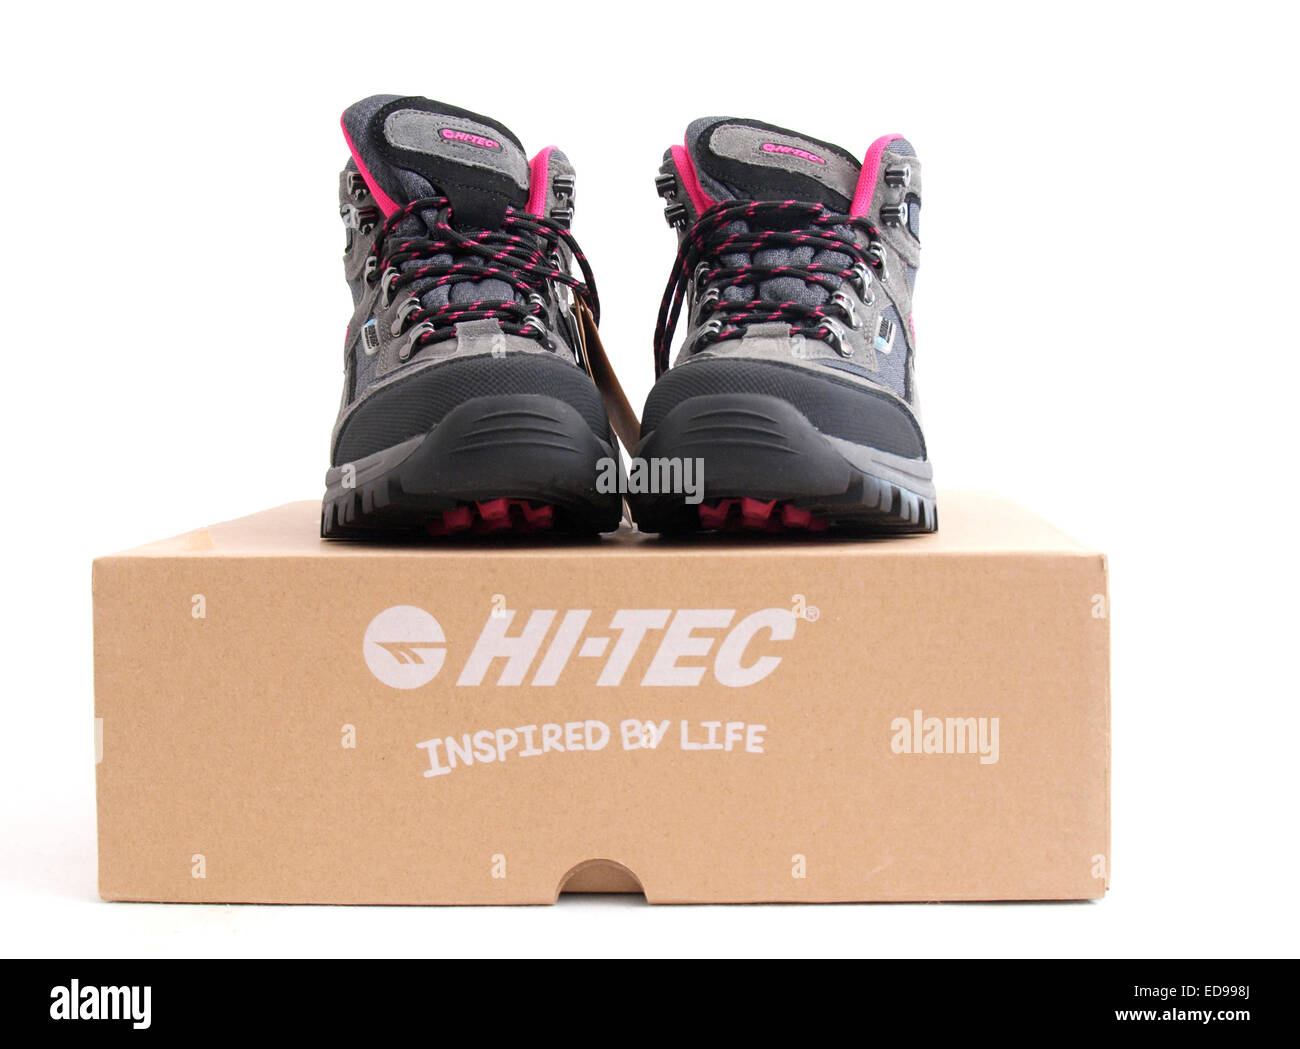 New woman's Hi-Tec hiking boots on box. Stock Photo